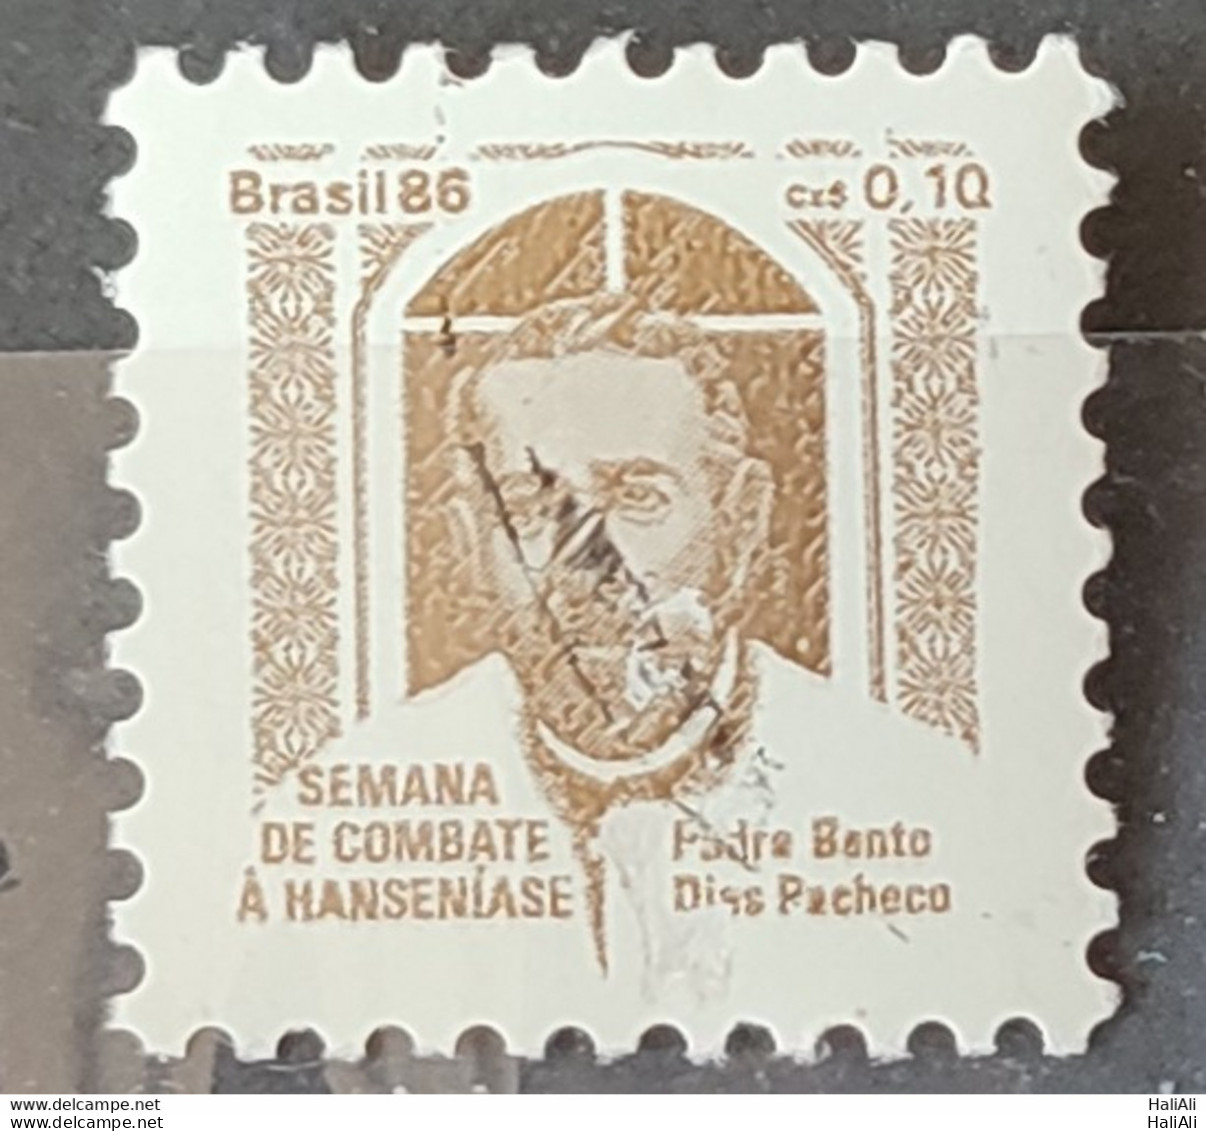 C 1538 Brazil Stamp Combat Against Hansen Hanseniasse Health Father Bento Religion 1986 H23 Circulated 1.jpg - Usados